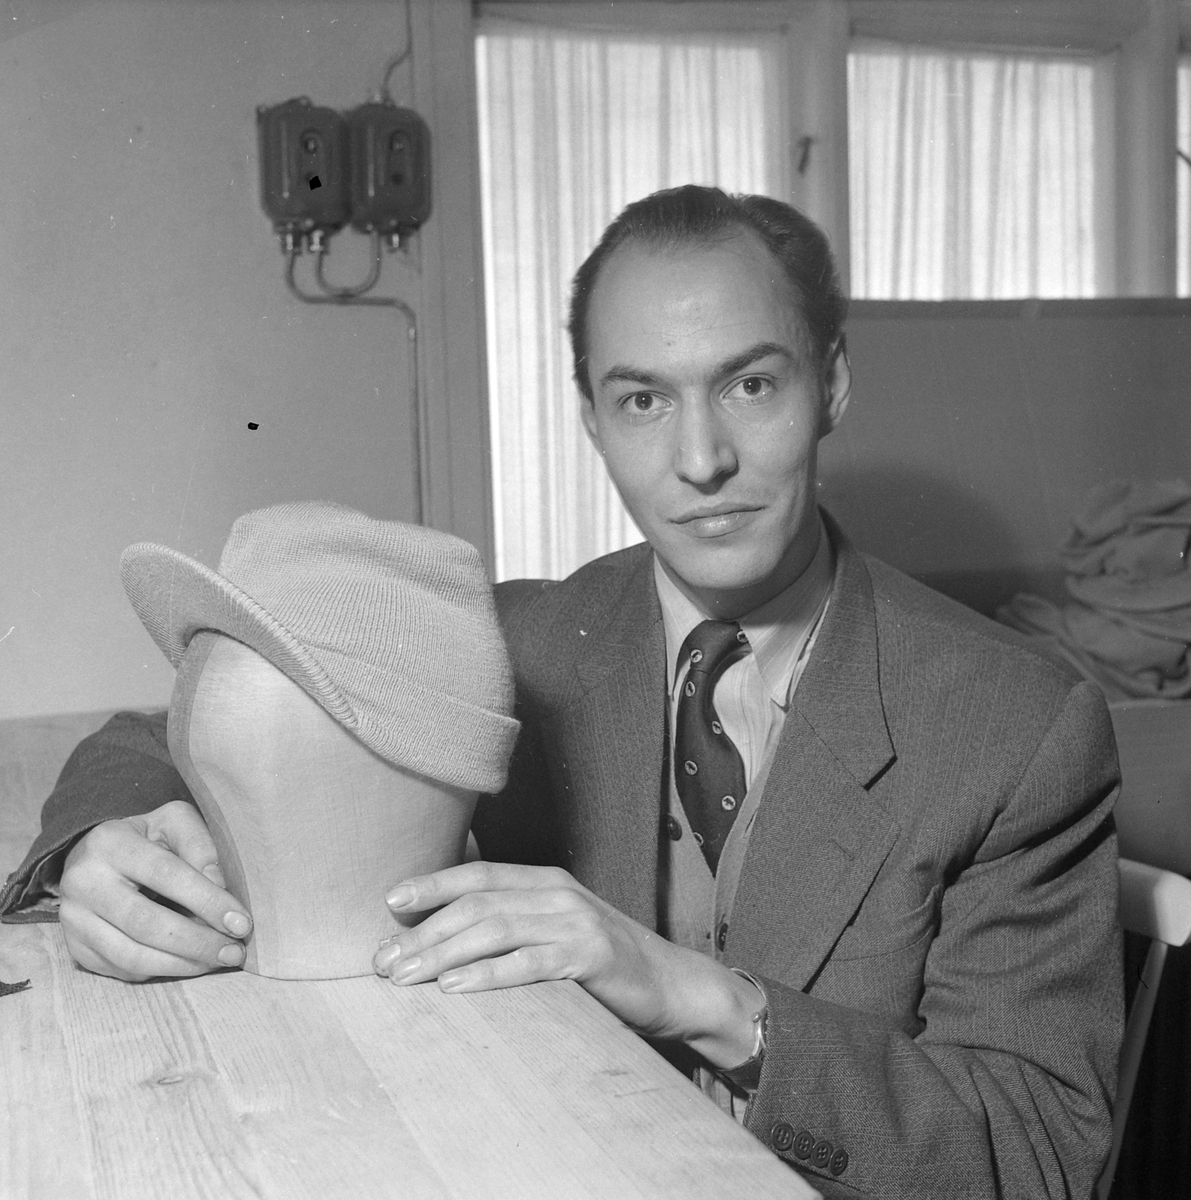 Ingeniør Rudolf Walldén med skilue